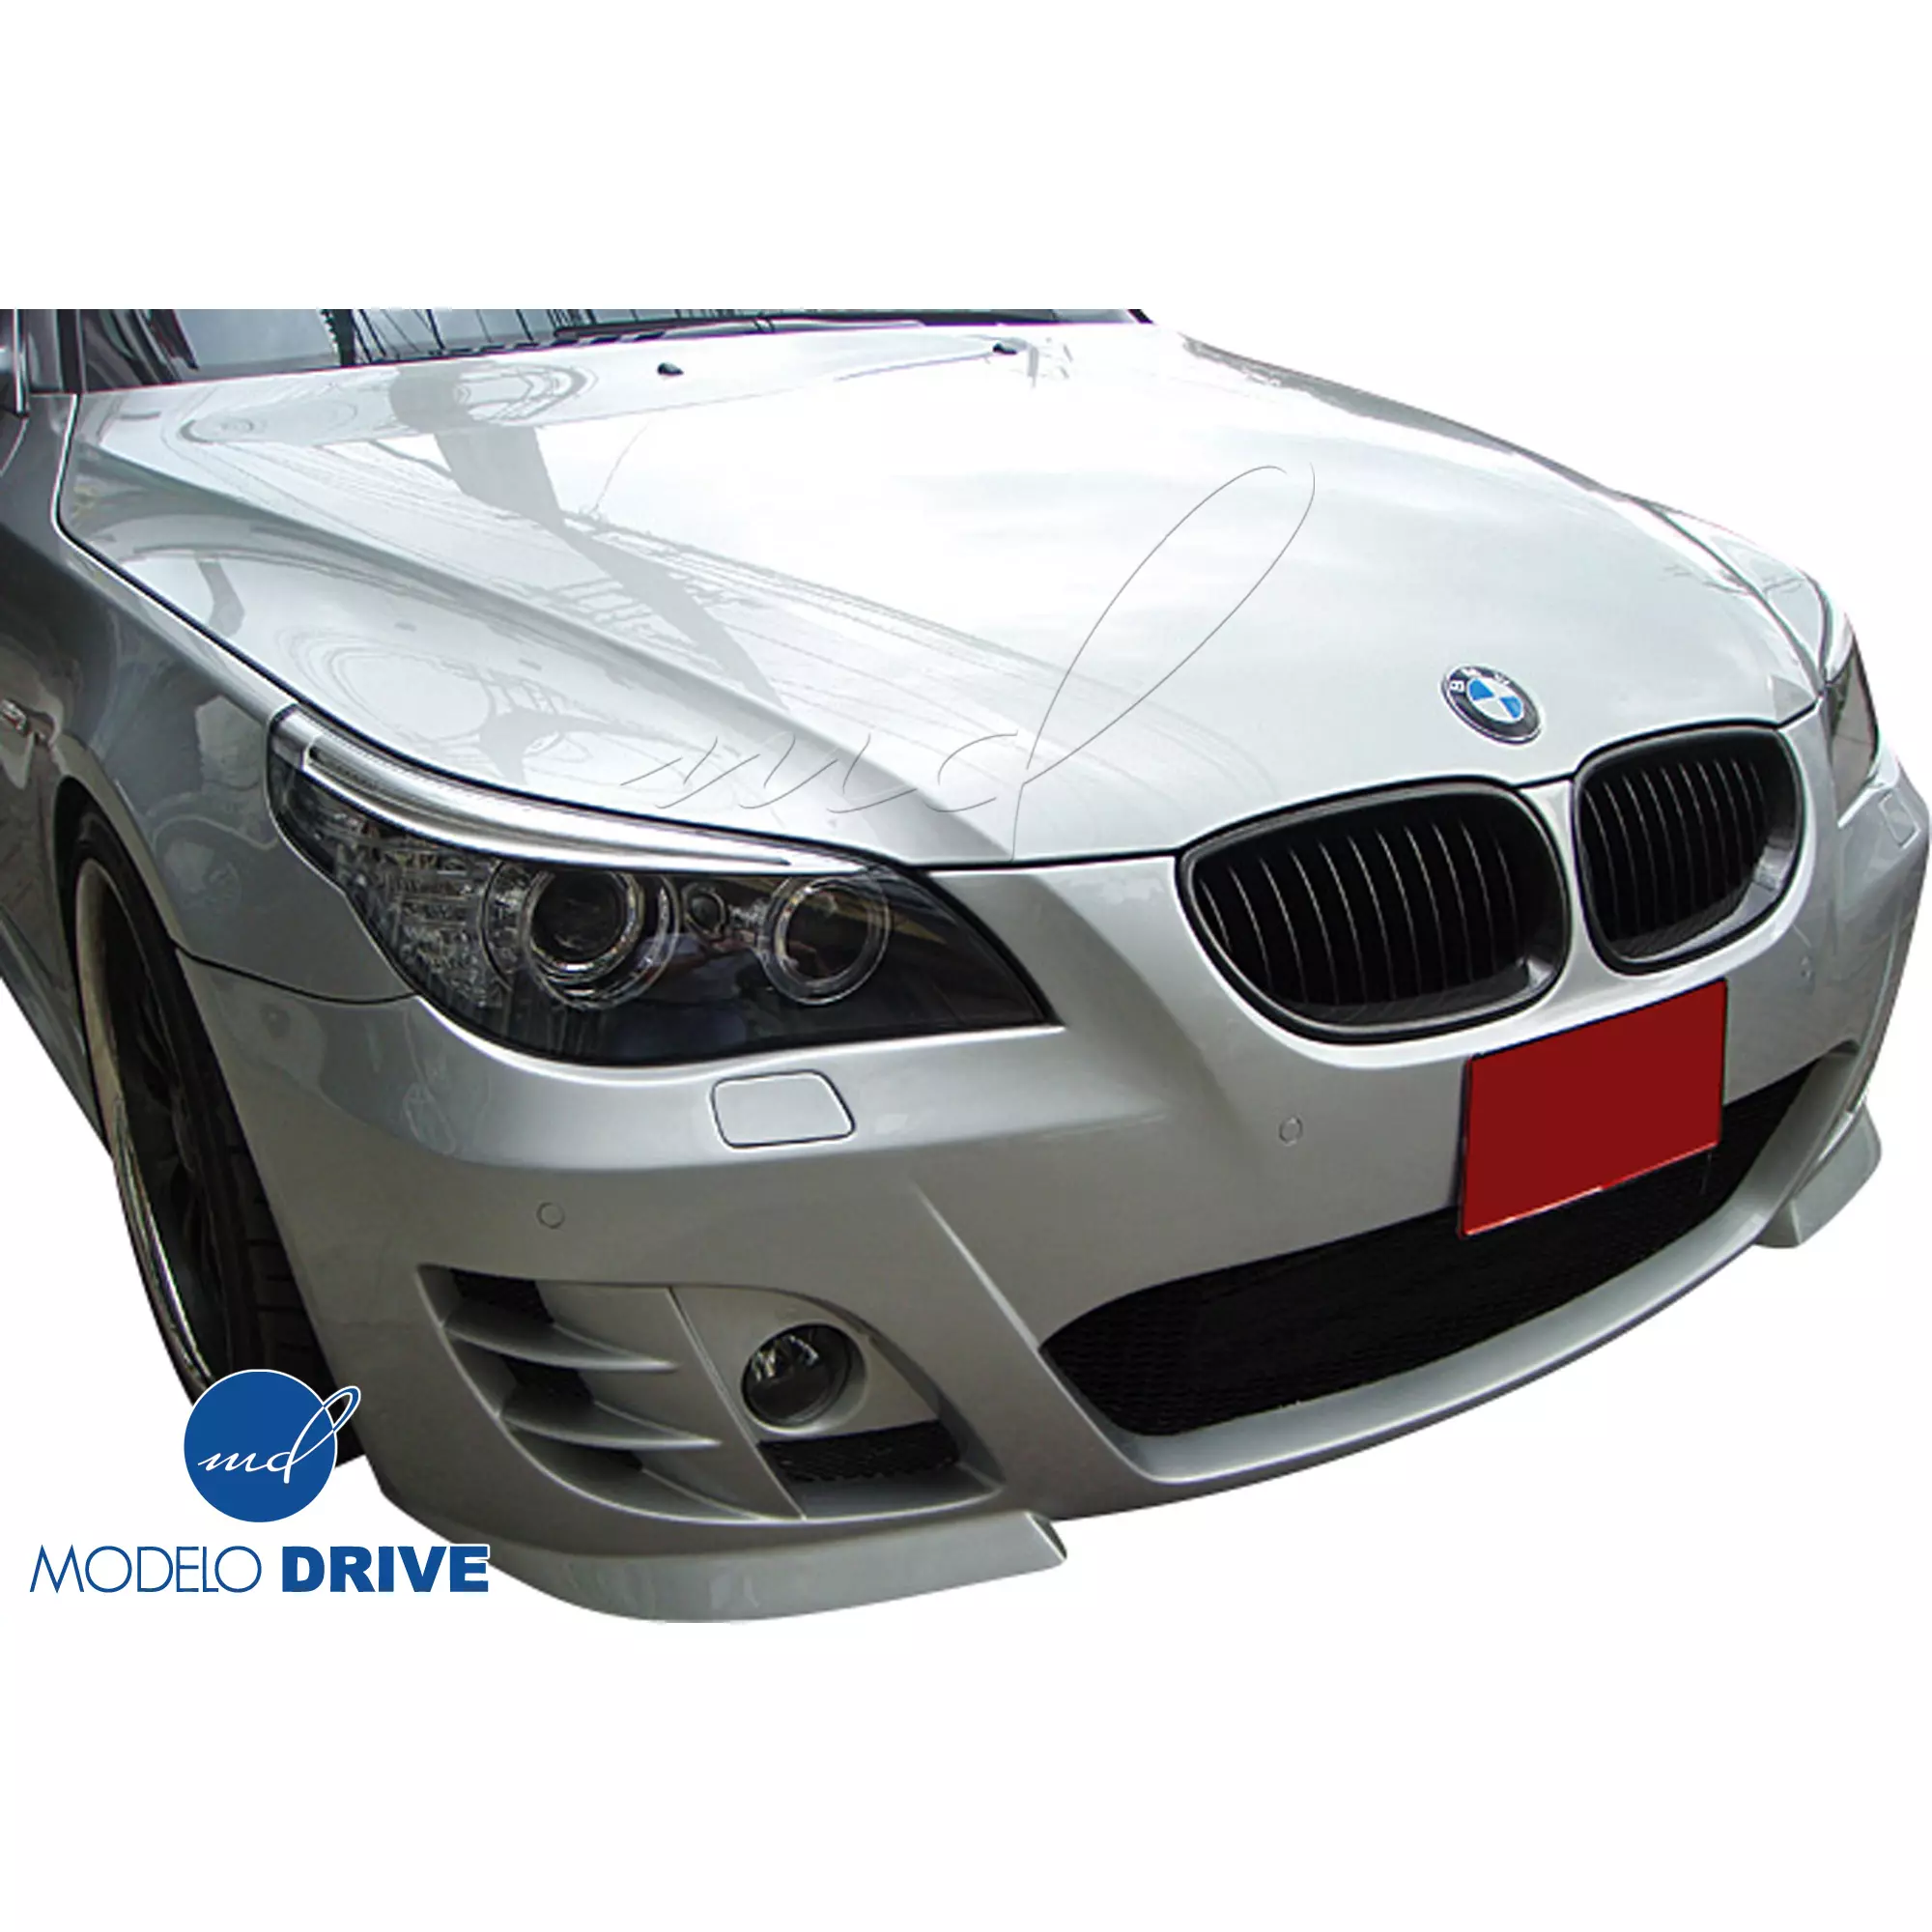 ModeloDrive FRP KERS Body Kit 4pc > BMW 3-Series E60 2004-2010 > 4dr - Image 5